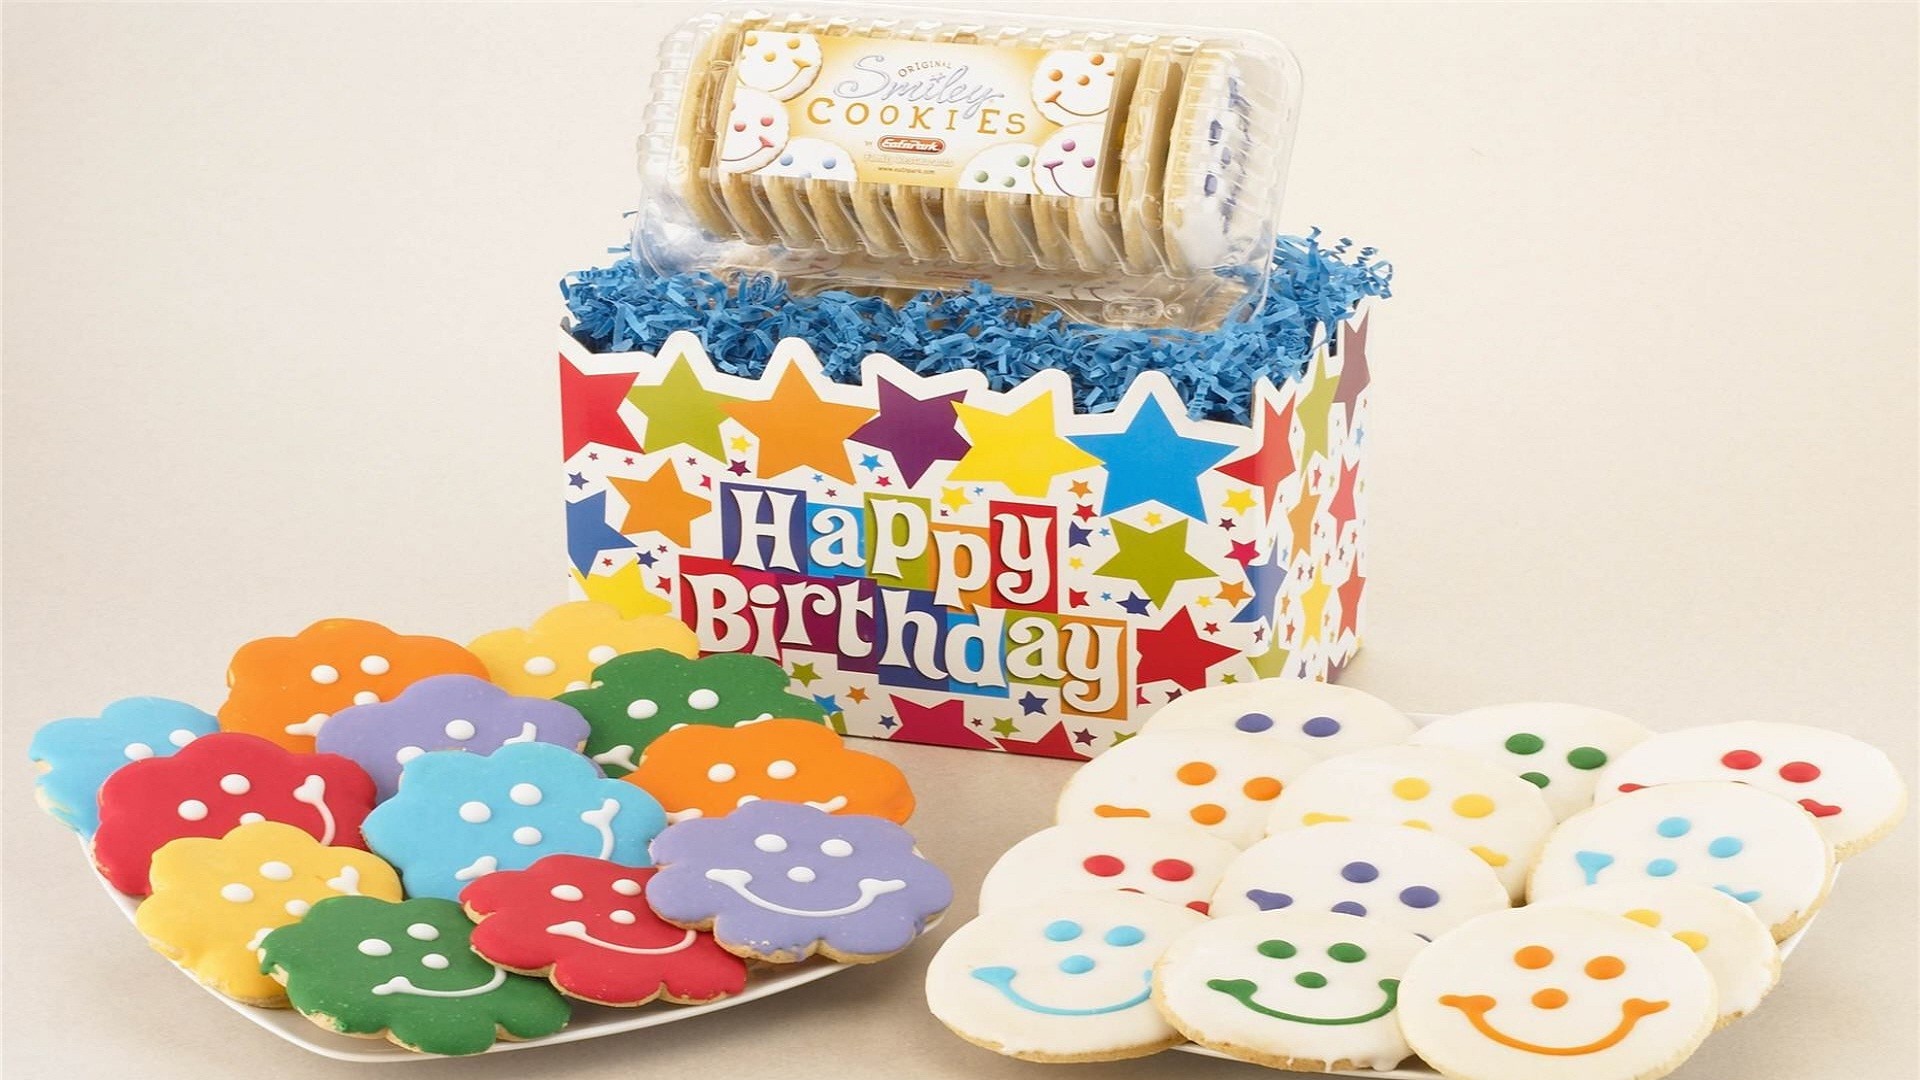 1920x1080 Happy birthday cake and candies